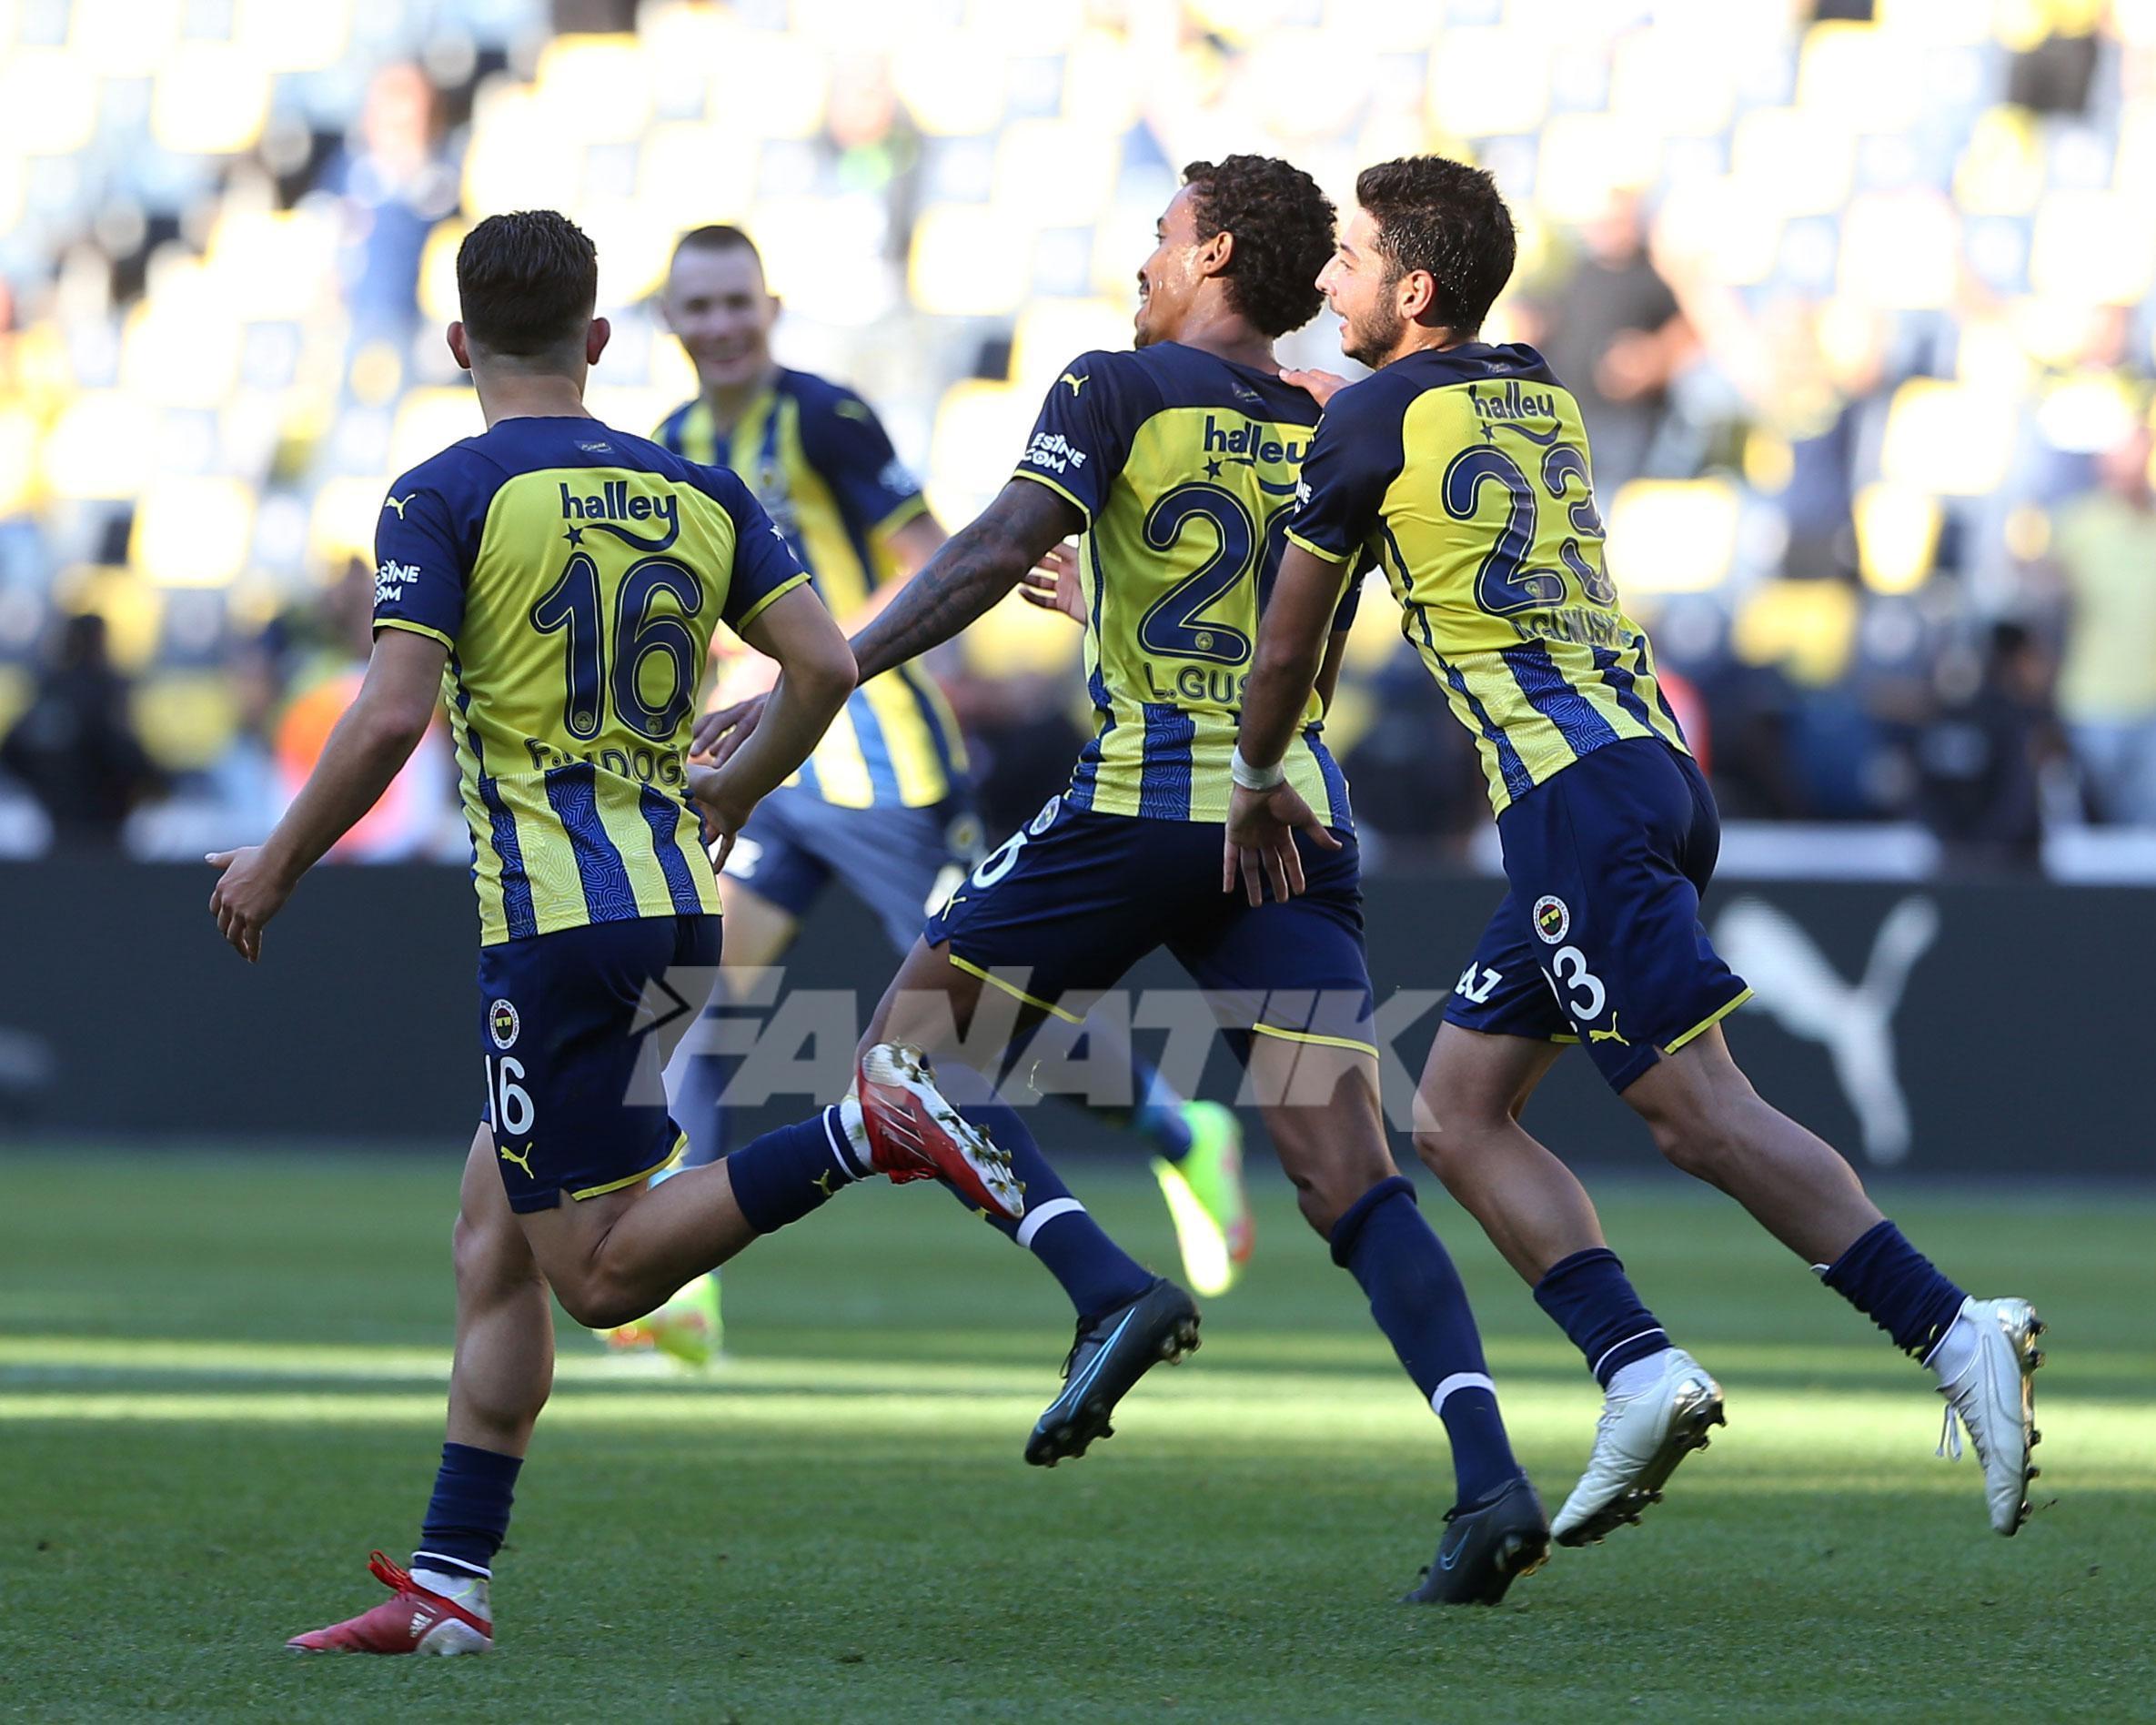 ÖZET | Fenerbahçe - Kasımpaşa maç sonucu: 2-1